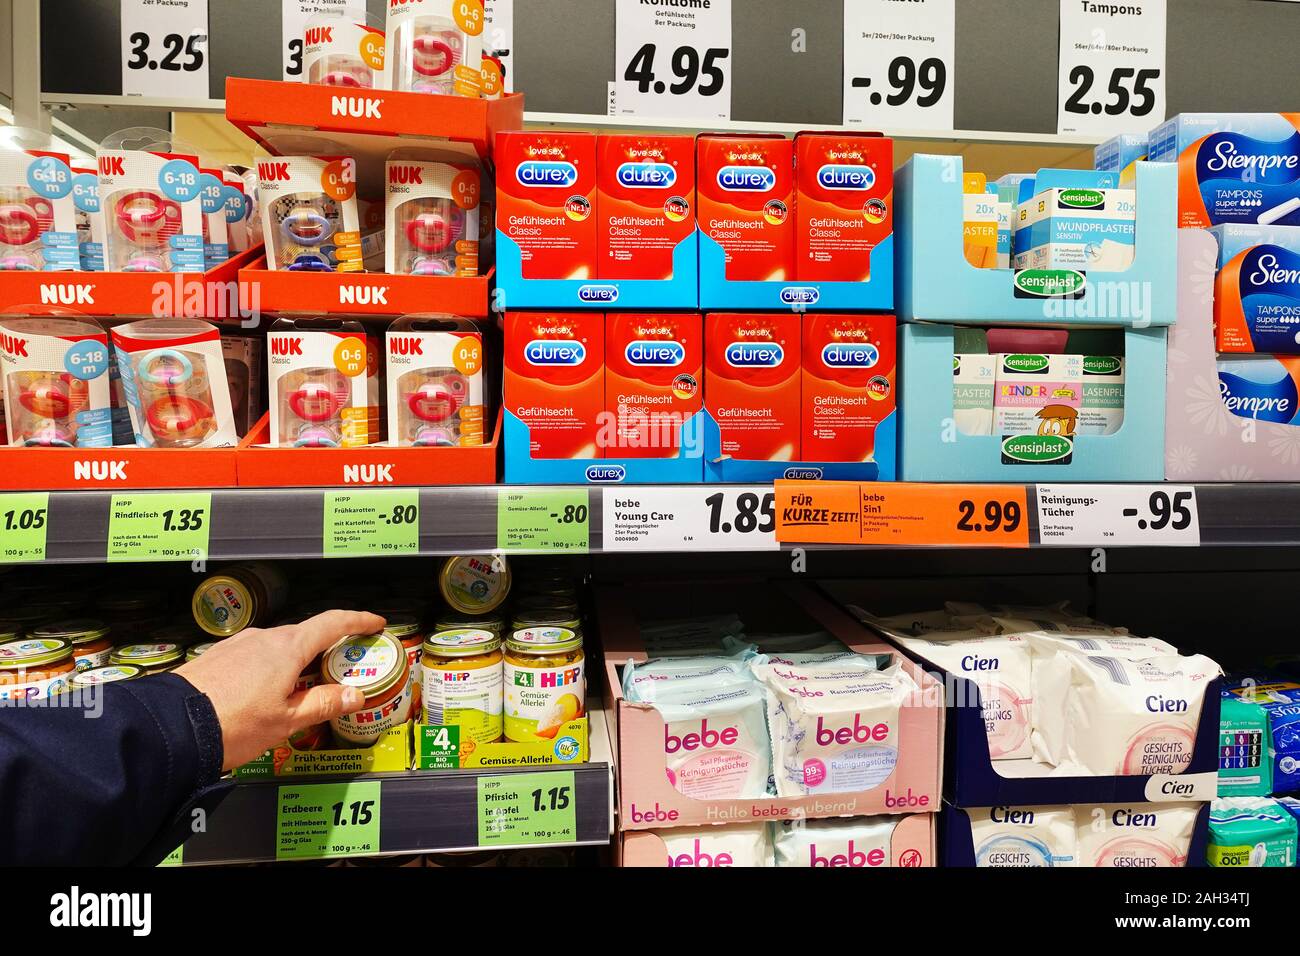 Durex condom packaging in a store Stock Photo